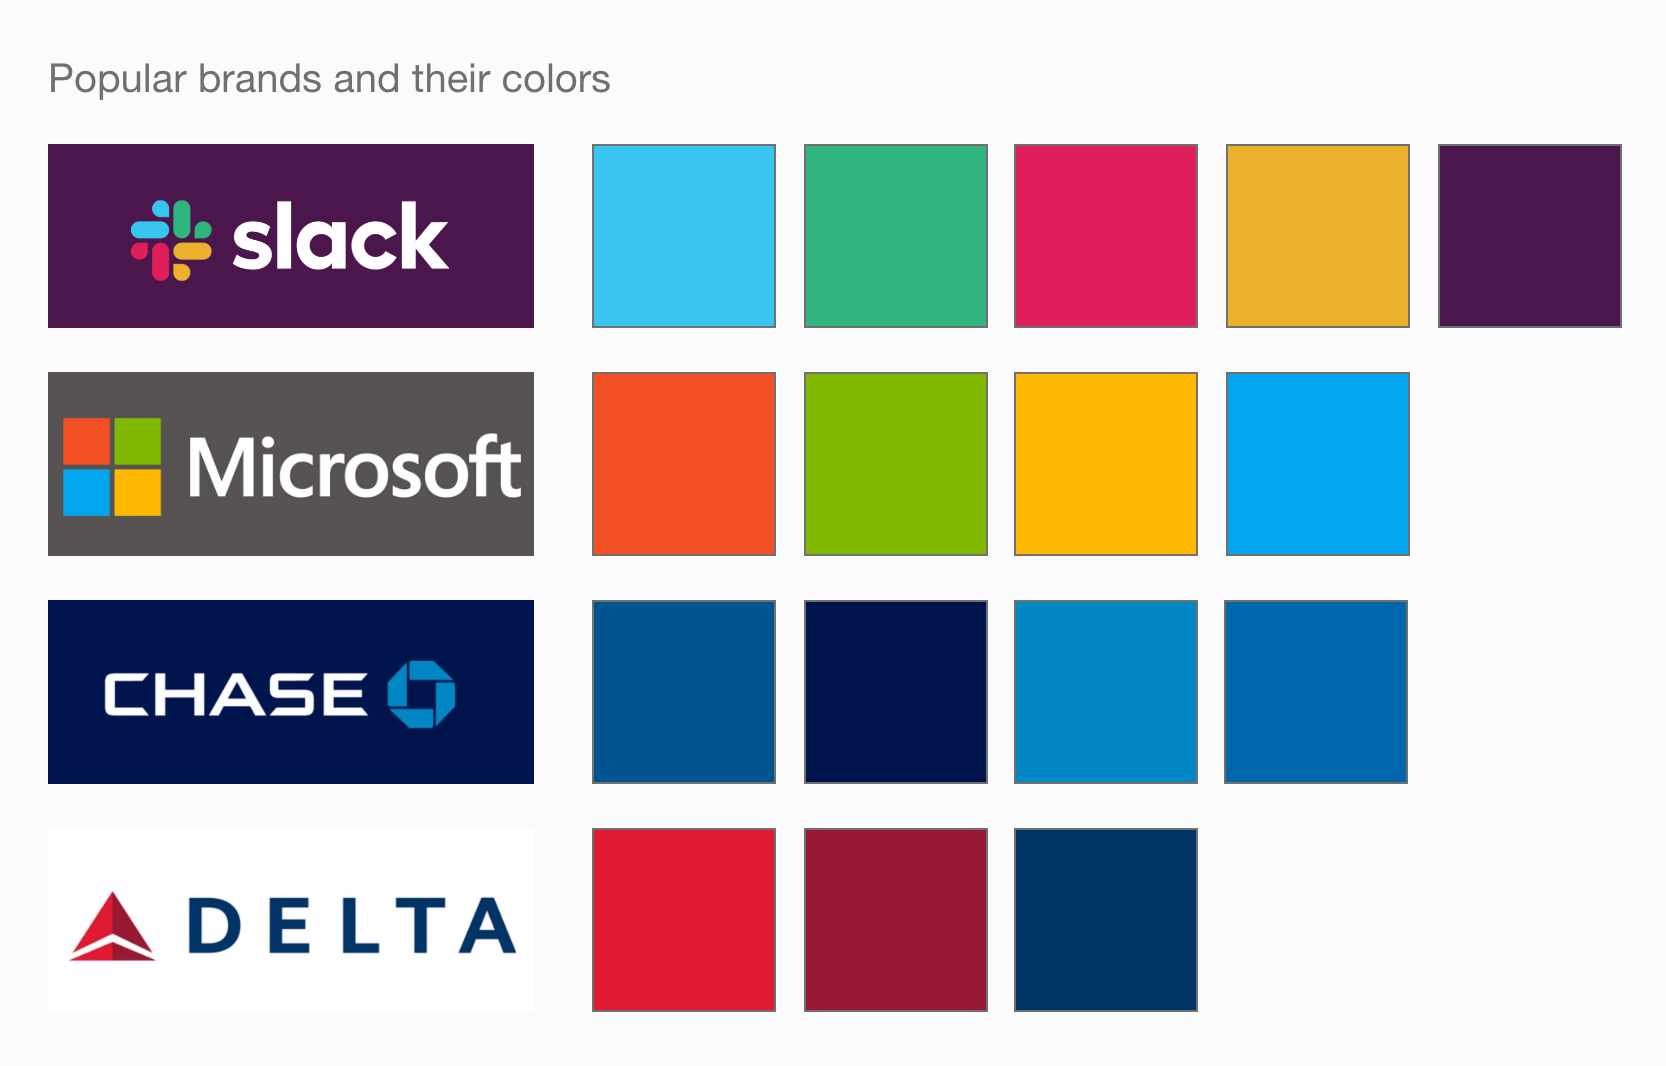 Purple in Marketing: Using Color in Branding